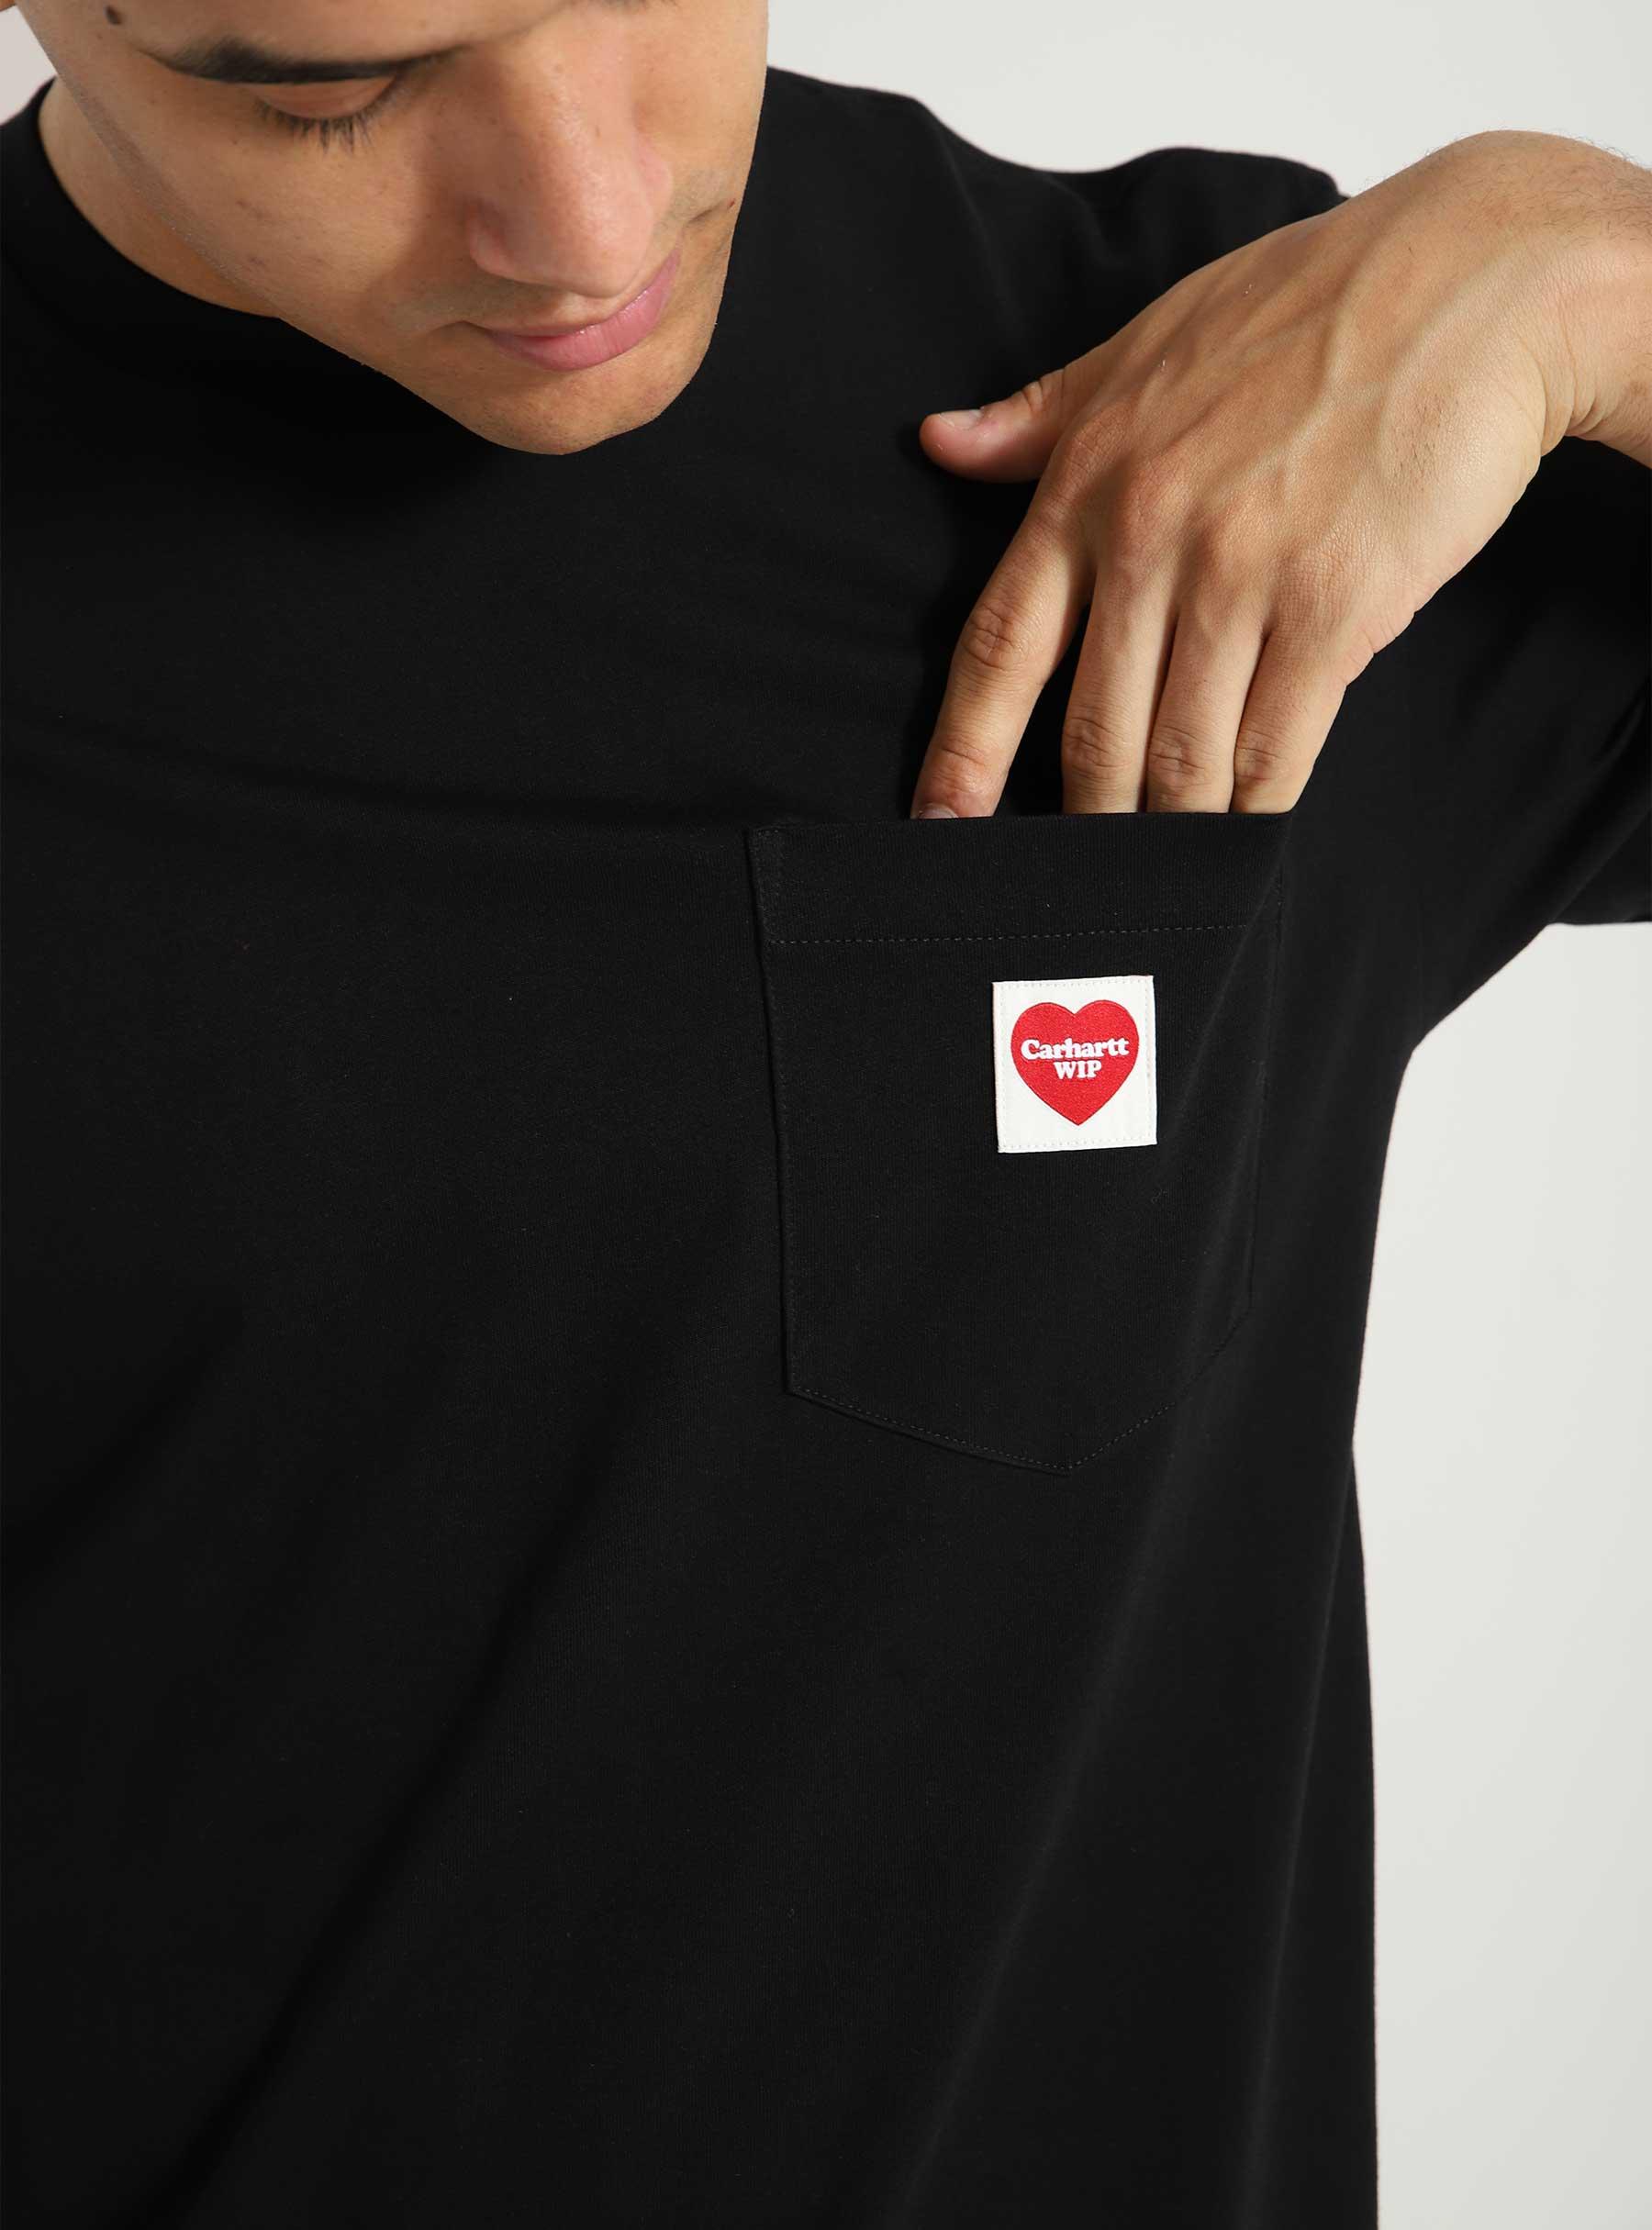 Pocket Heart T-Shirt Black I032128-89XX